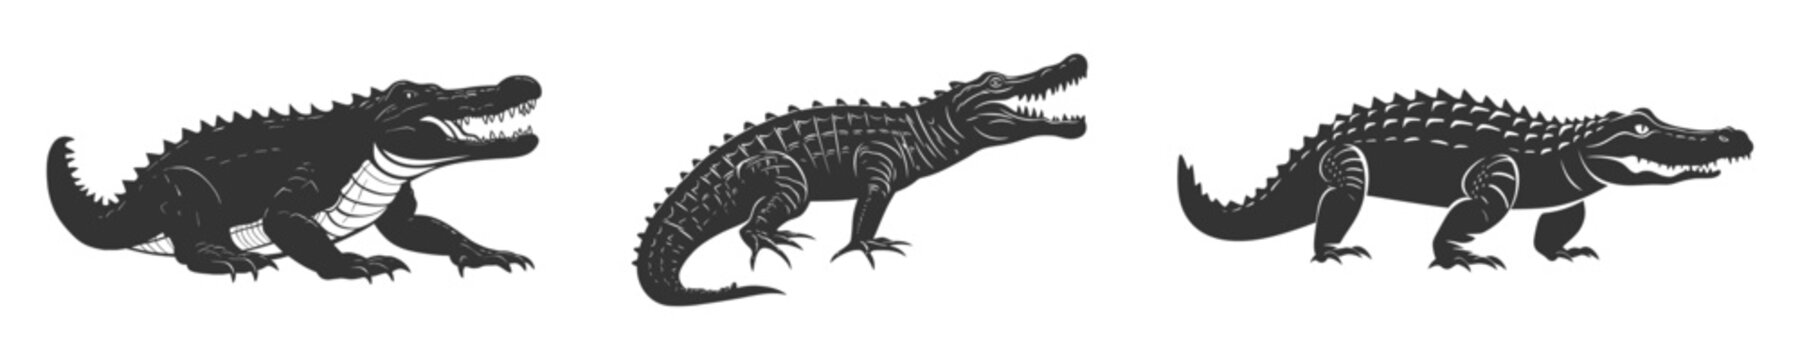 Crocodile alligator silhouette. Vector illustration